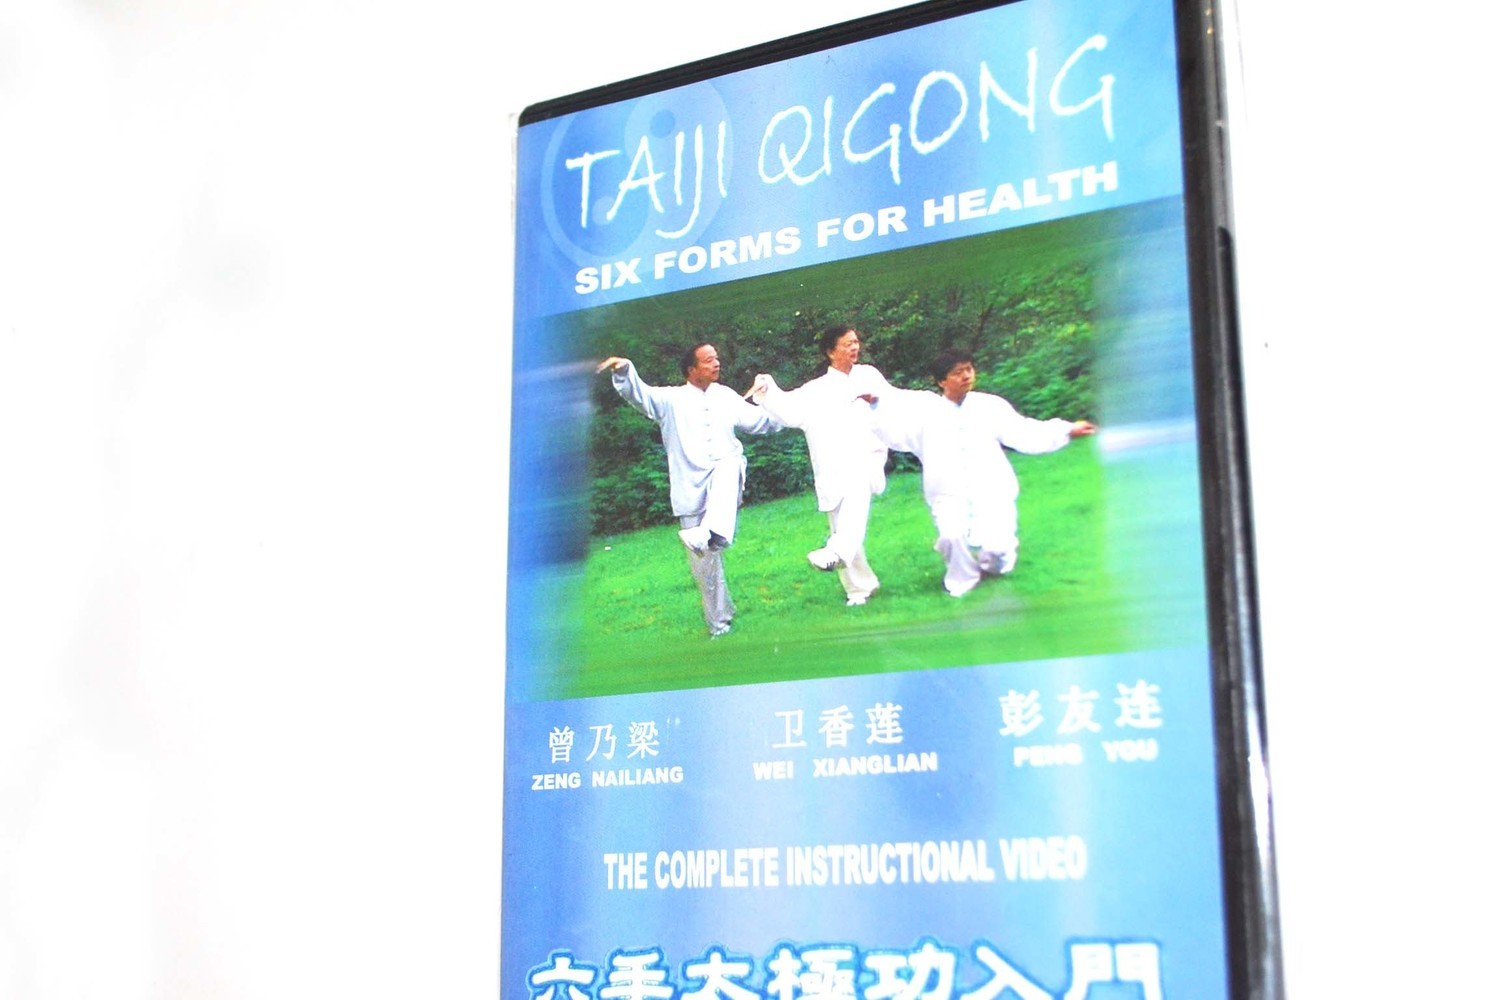 DVD Taji y Qi gong  seis formas para la salud.